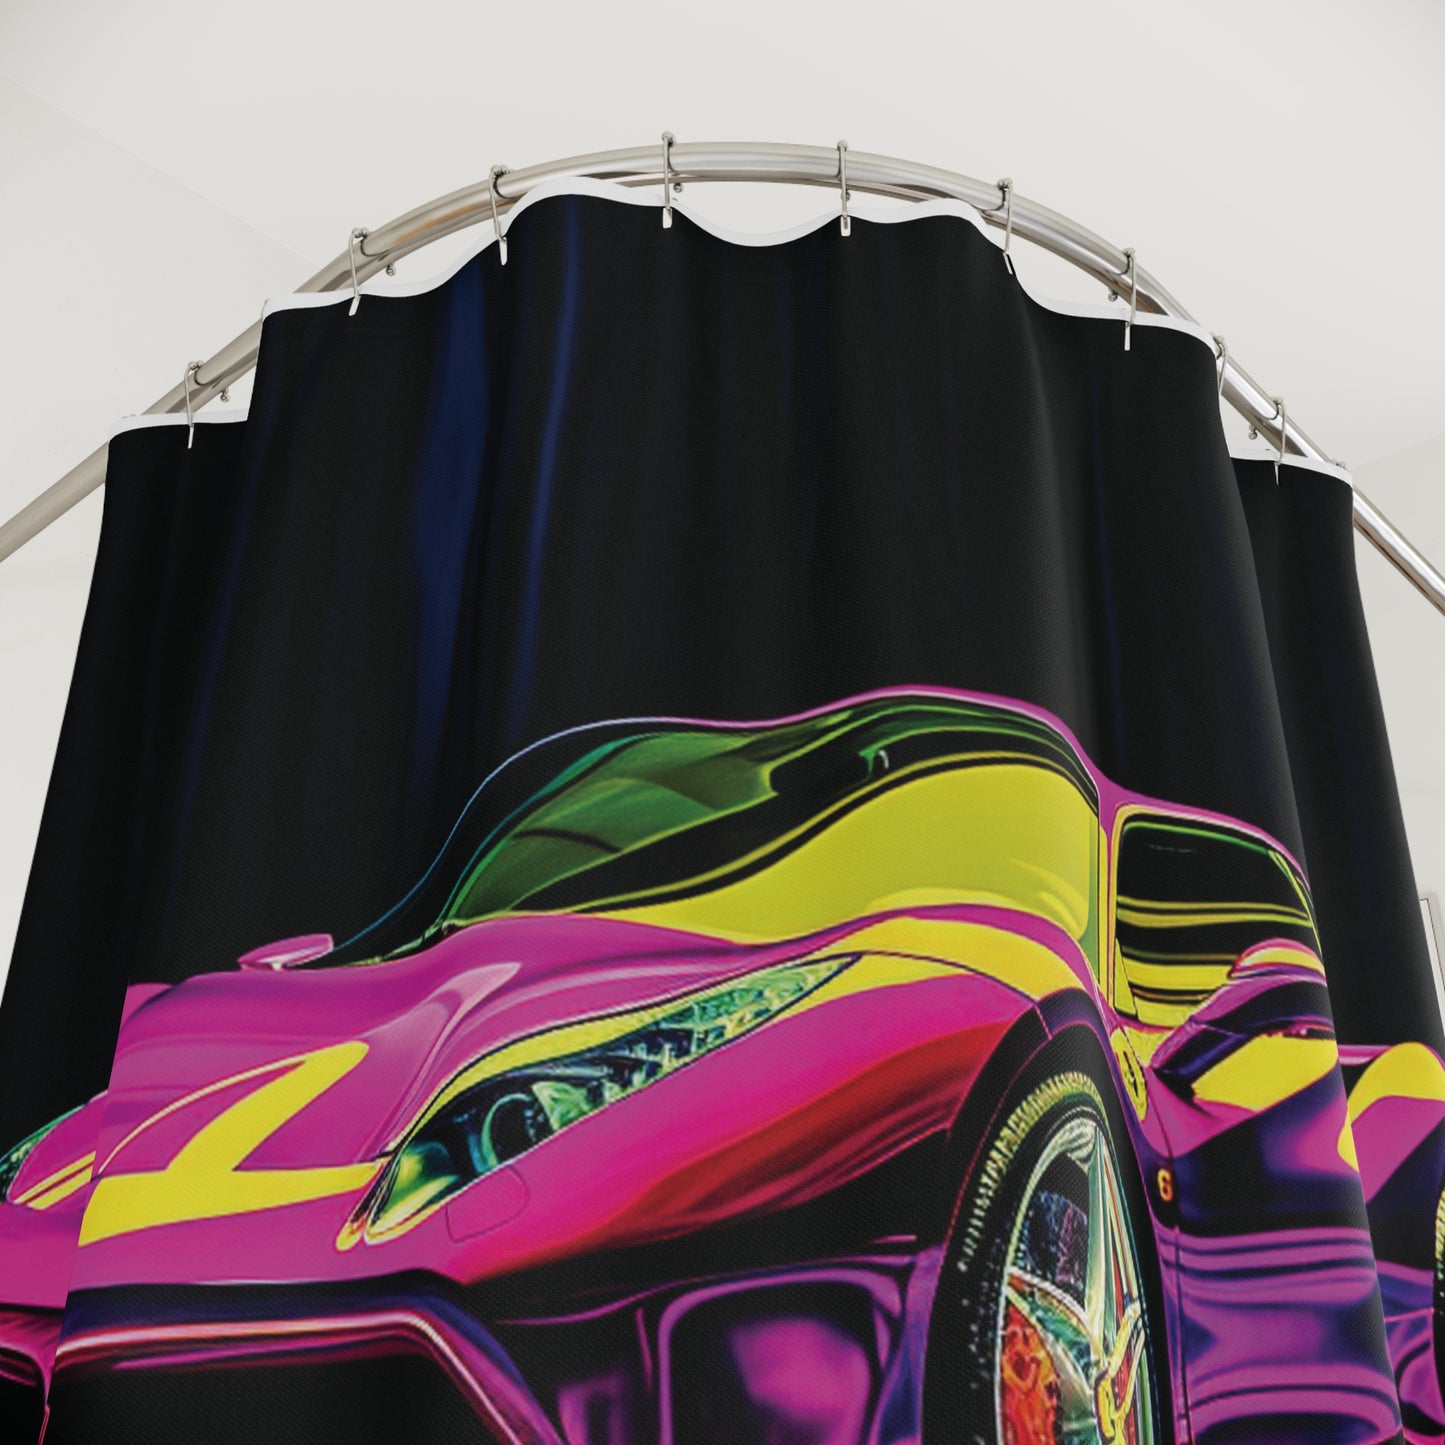 Polyester Shower Curtain Pink Ferrari Macro 3